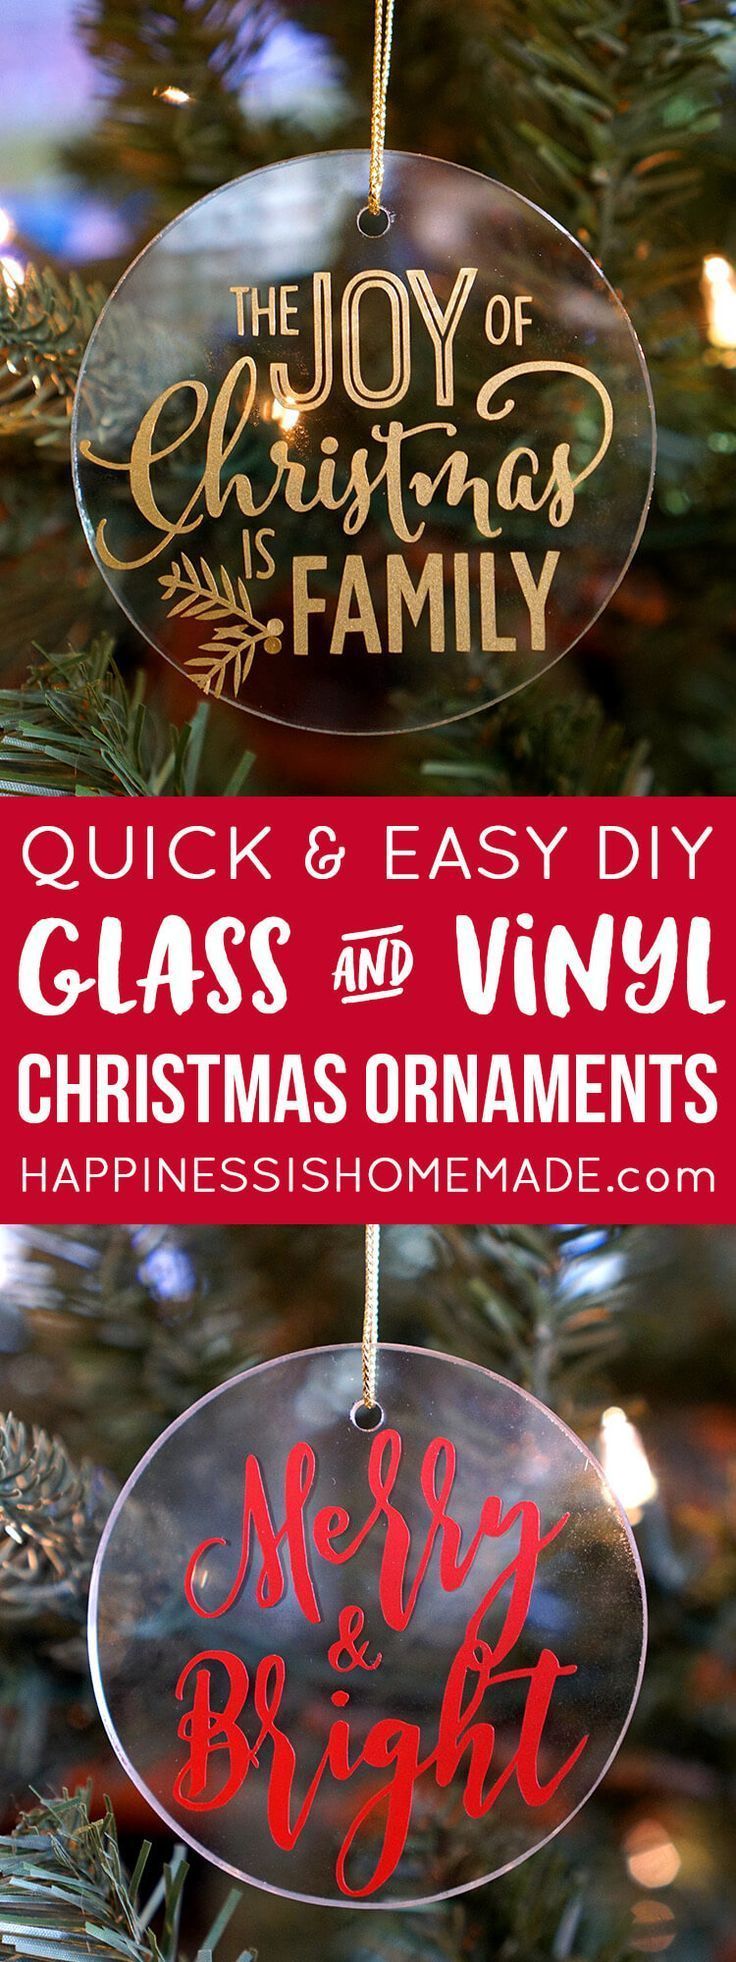 Easy Glass & Vinyl Christmas Ornaments - Easy Glass & Vinyl Christmas Ornaments -   19 diy Christmas esferas ideas